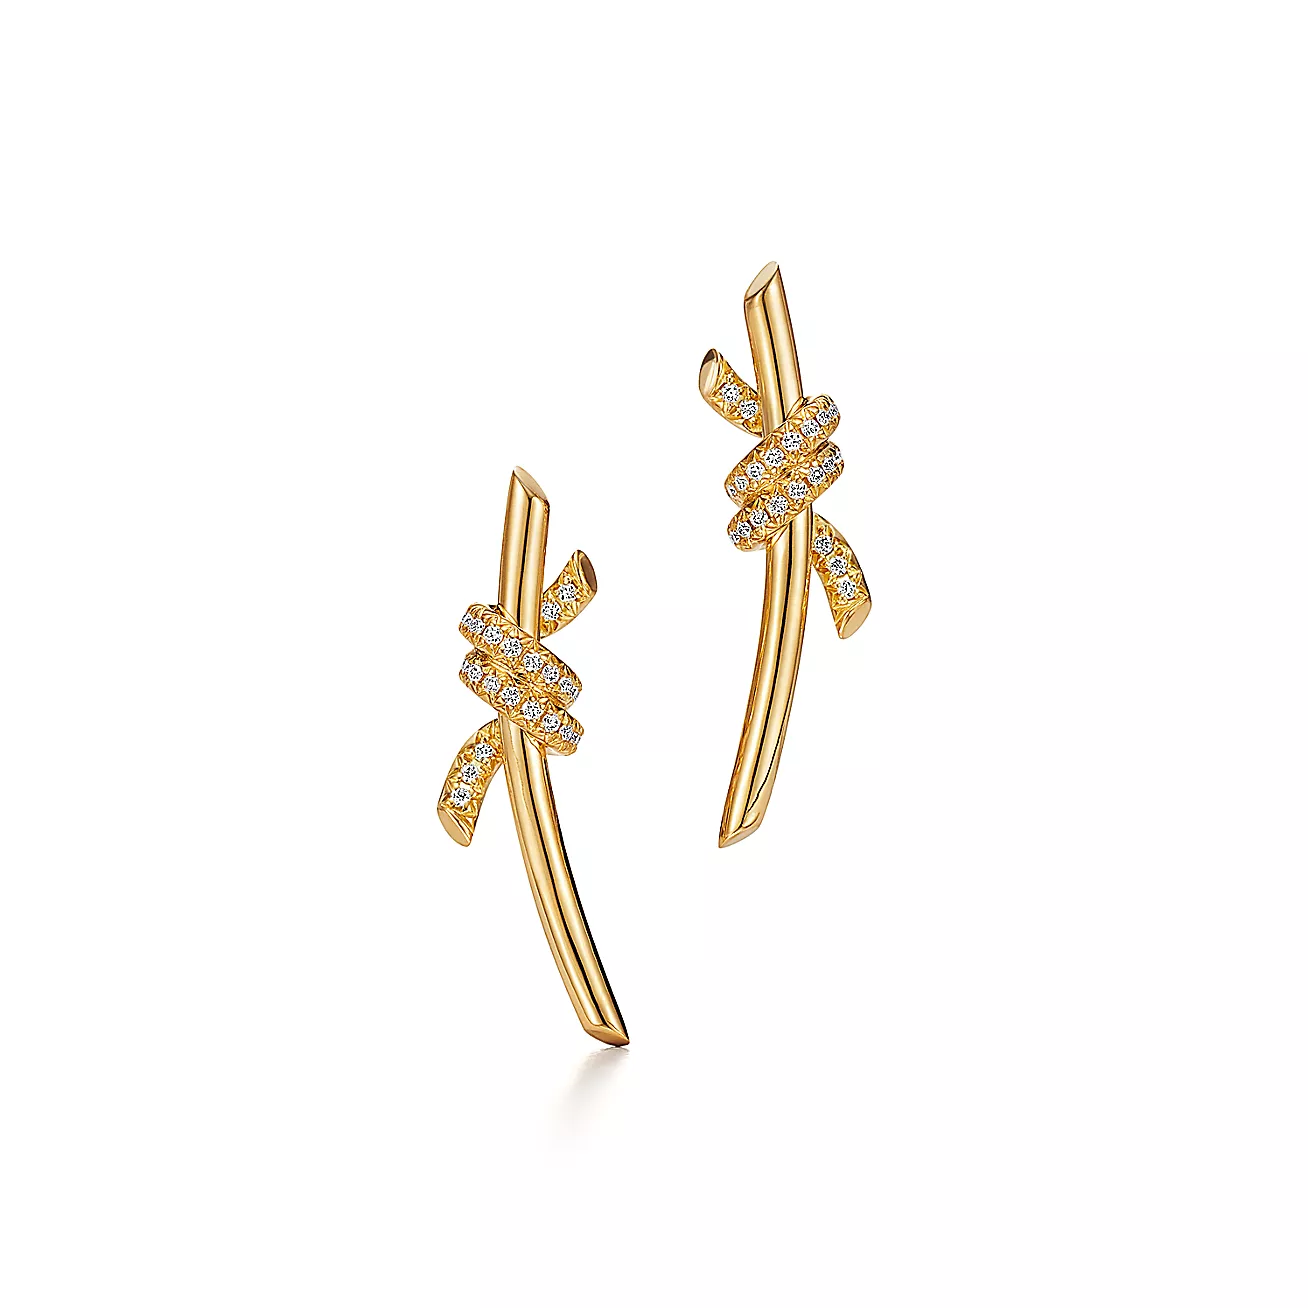 Tiffany Knot Earrings in 18k Gold with Diamonds